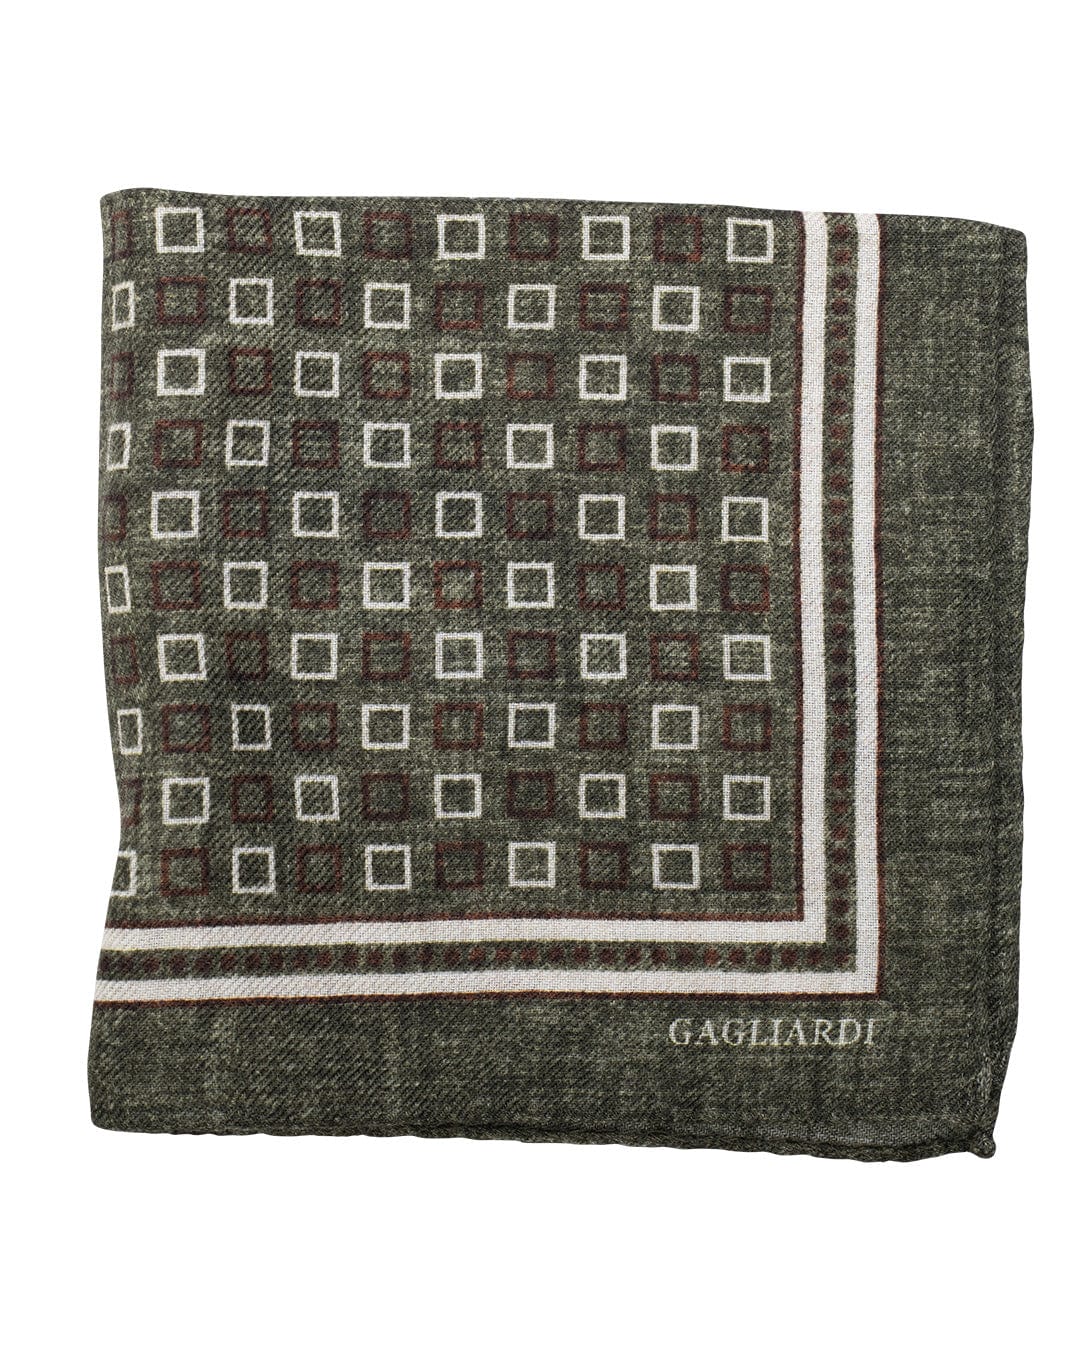 Gagliardi Pocket Squares ONE Gagliardi Green Squares Print Italian Wool Flannel Pocket Square